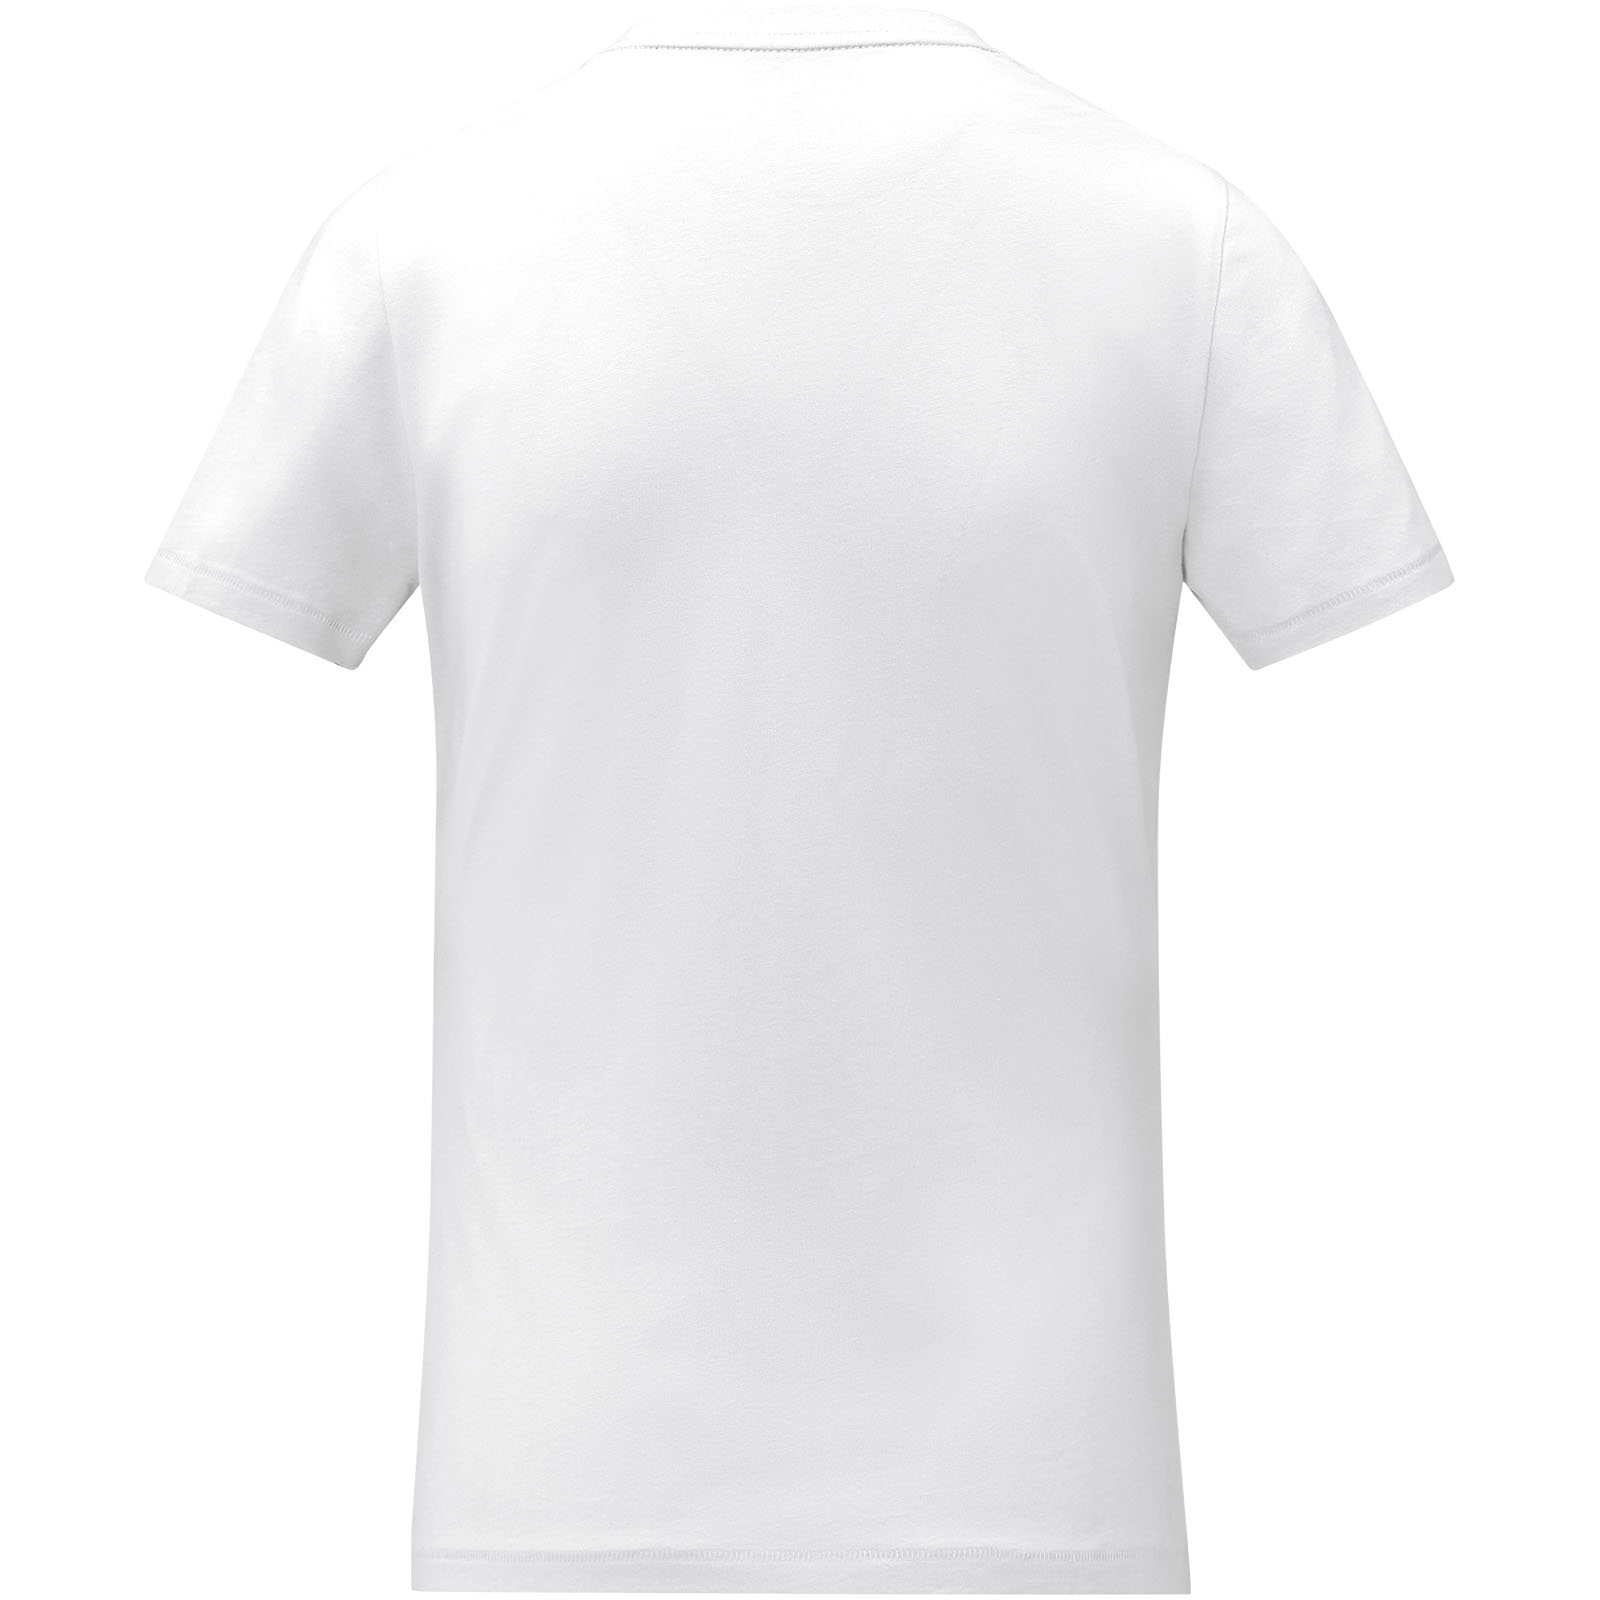 Advertising T-shirts - Somoto short sleeve women's V-neck t-shirt  - 2